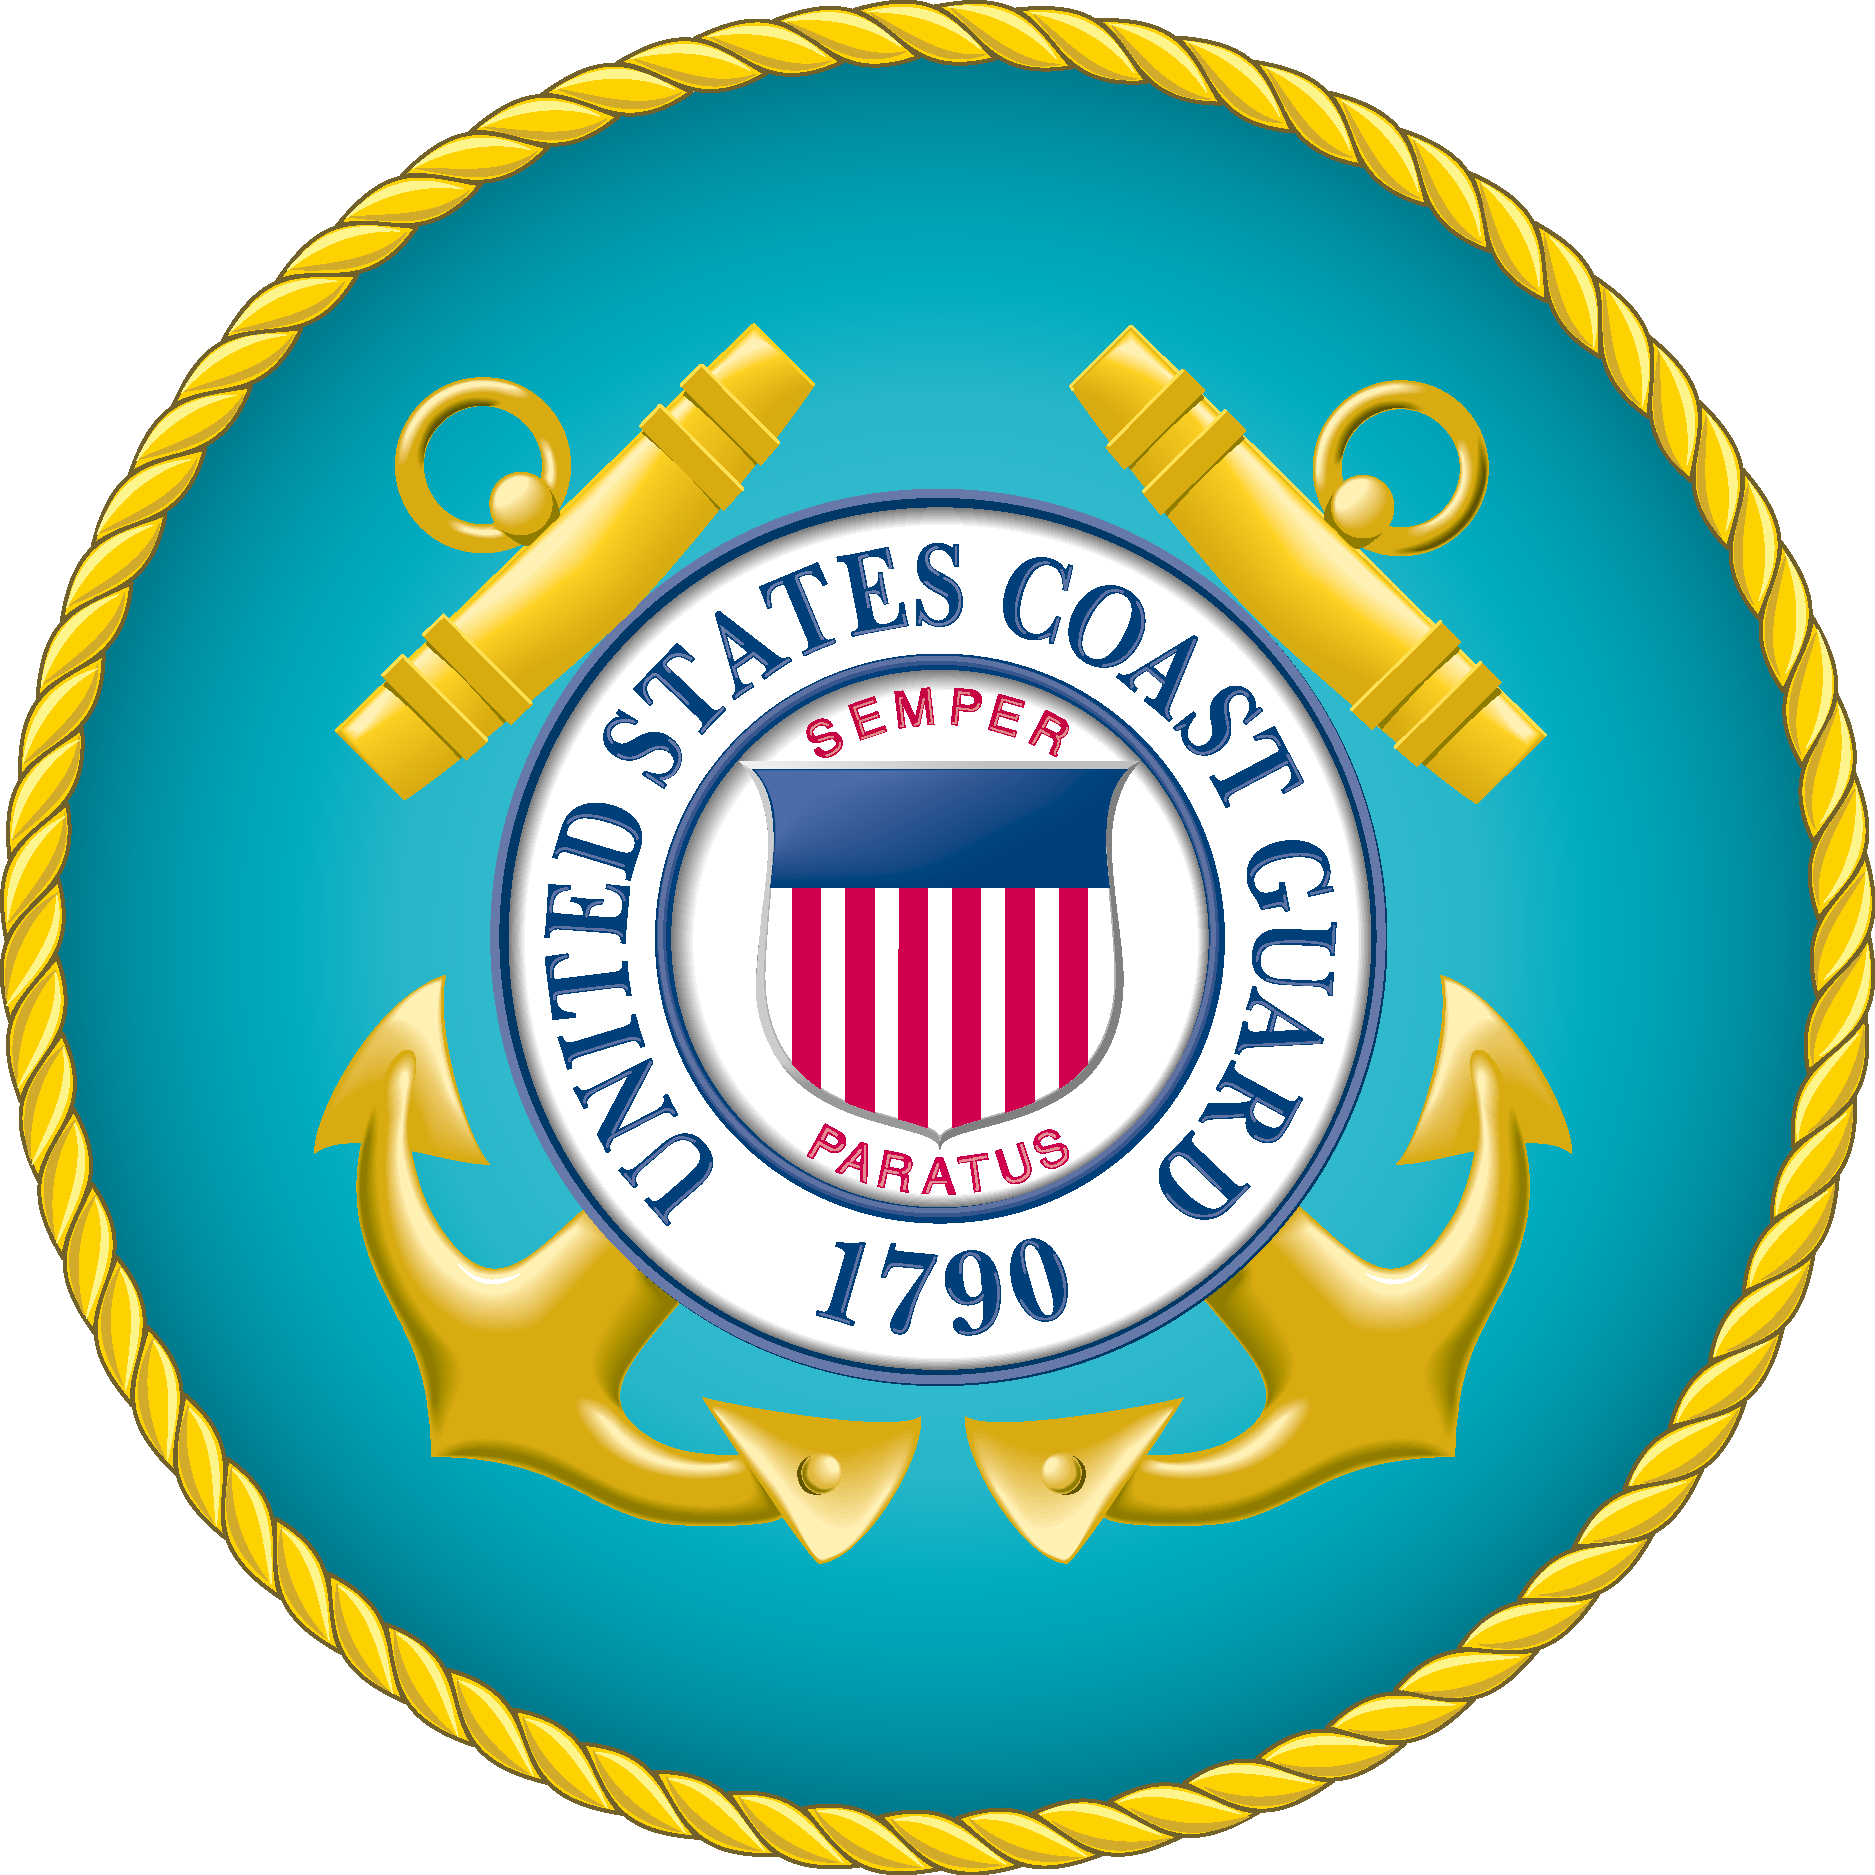 Us Coast Guard Seal Logo Vector